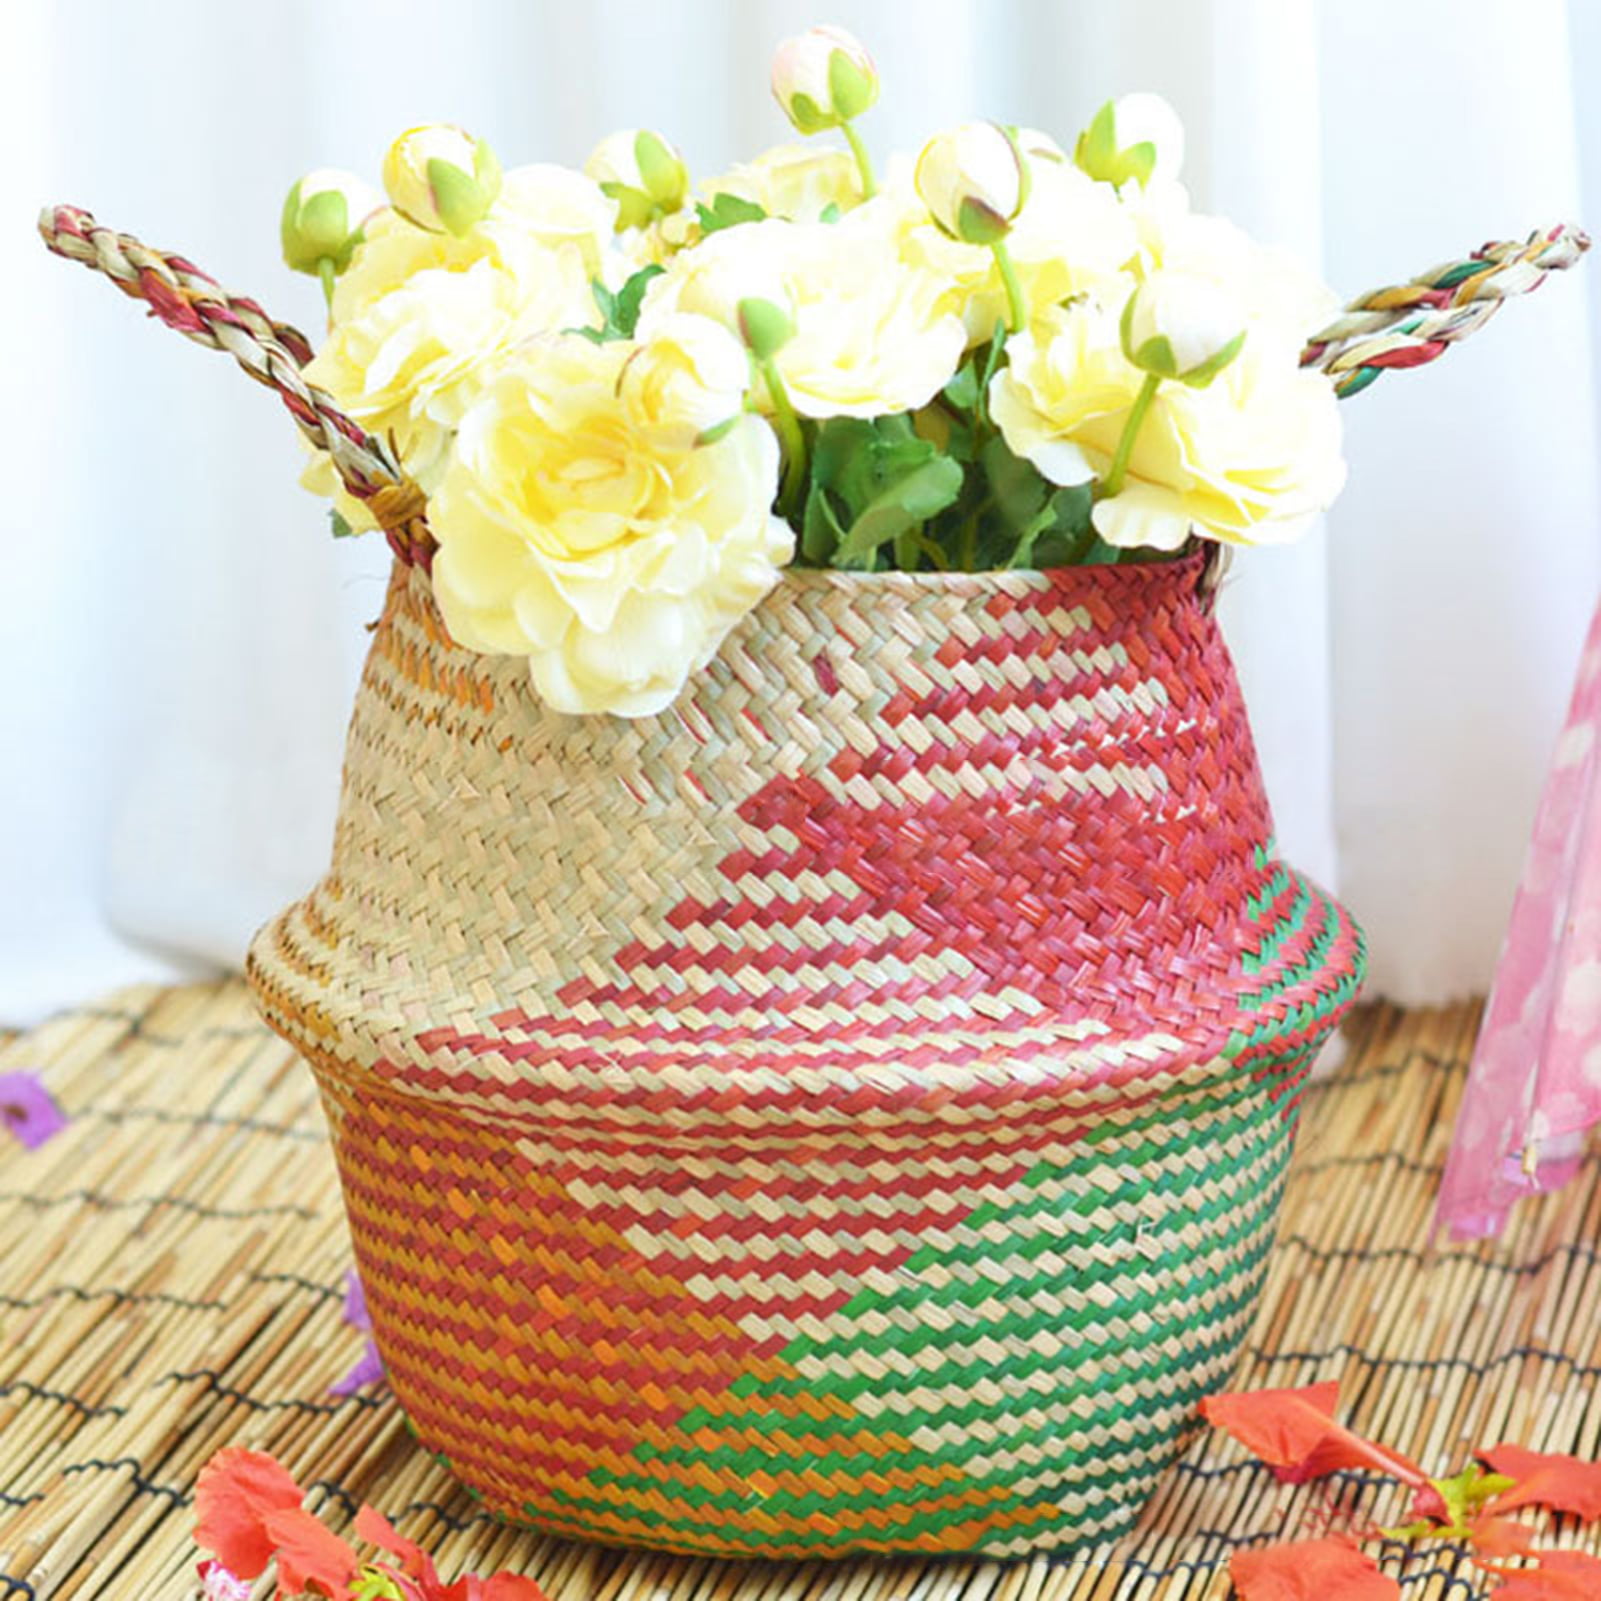 Seagrass Woven Storage Basket Flower Plants Straw Pots Bag Laundry Decor S 